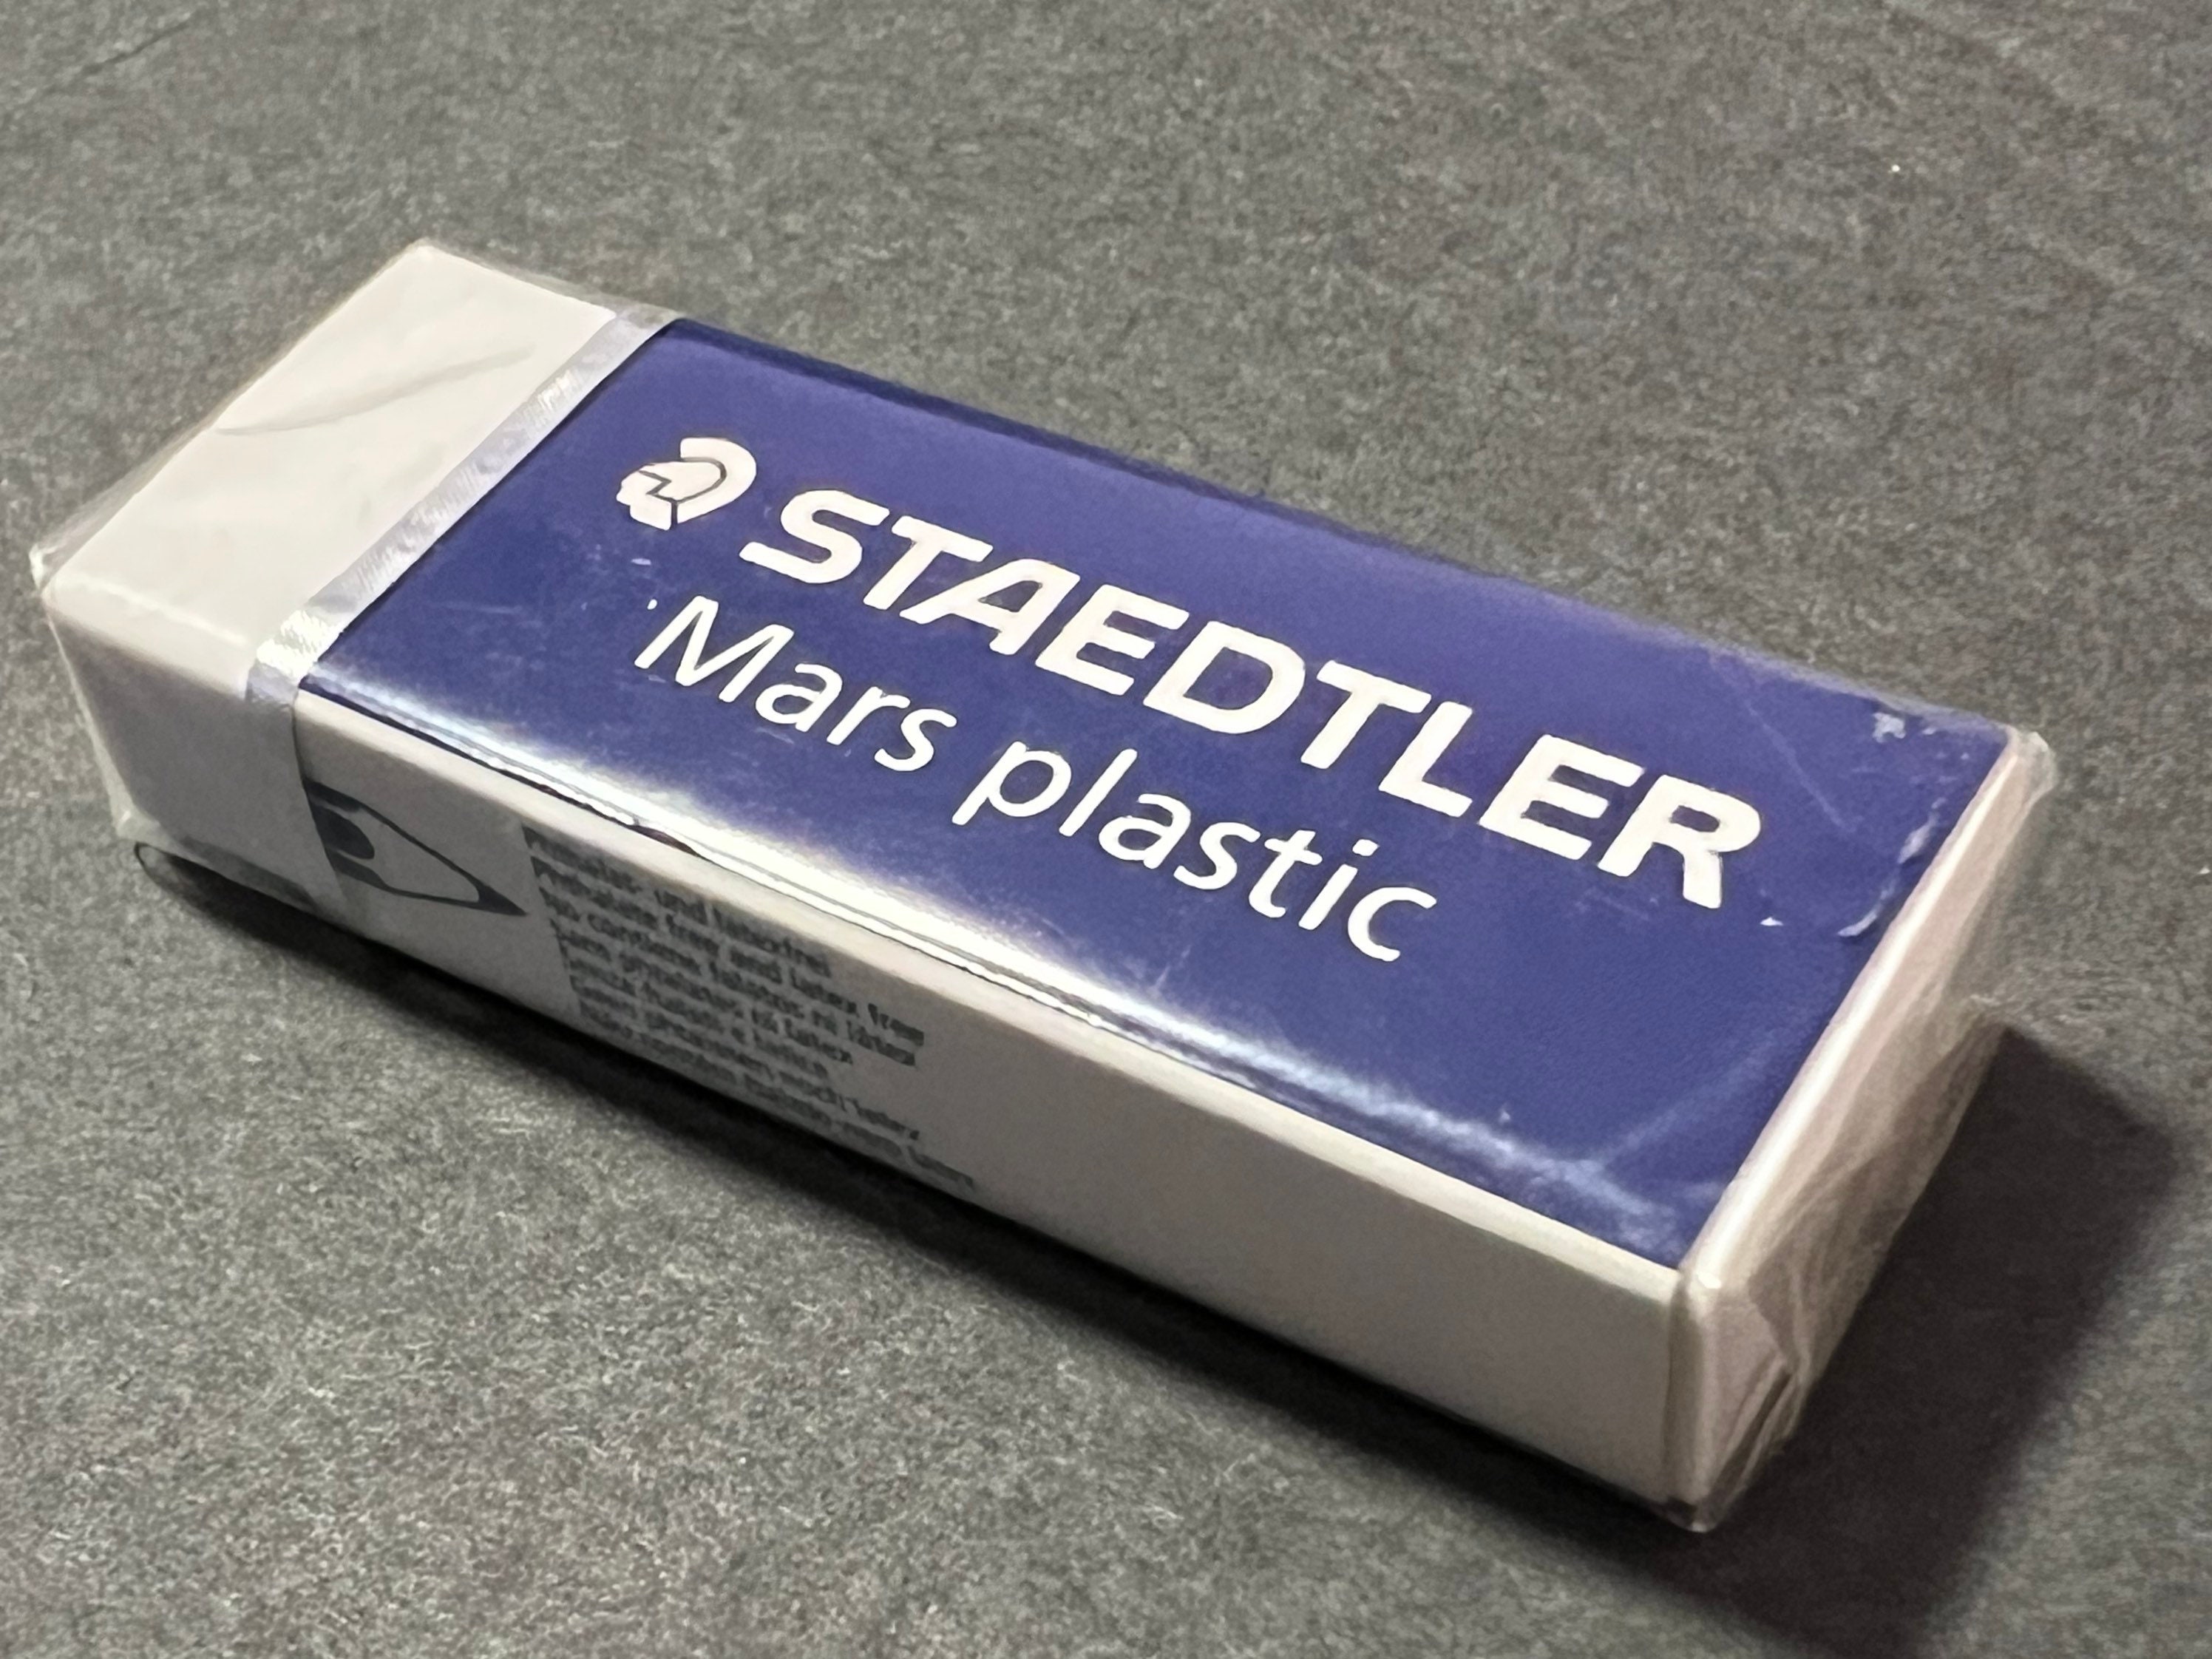 5 X Staedtler Mars Plastic Pencil Eraser Rubbers School Office Drawing 